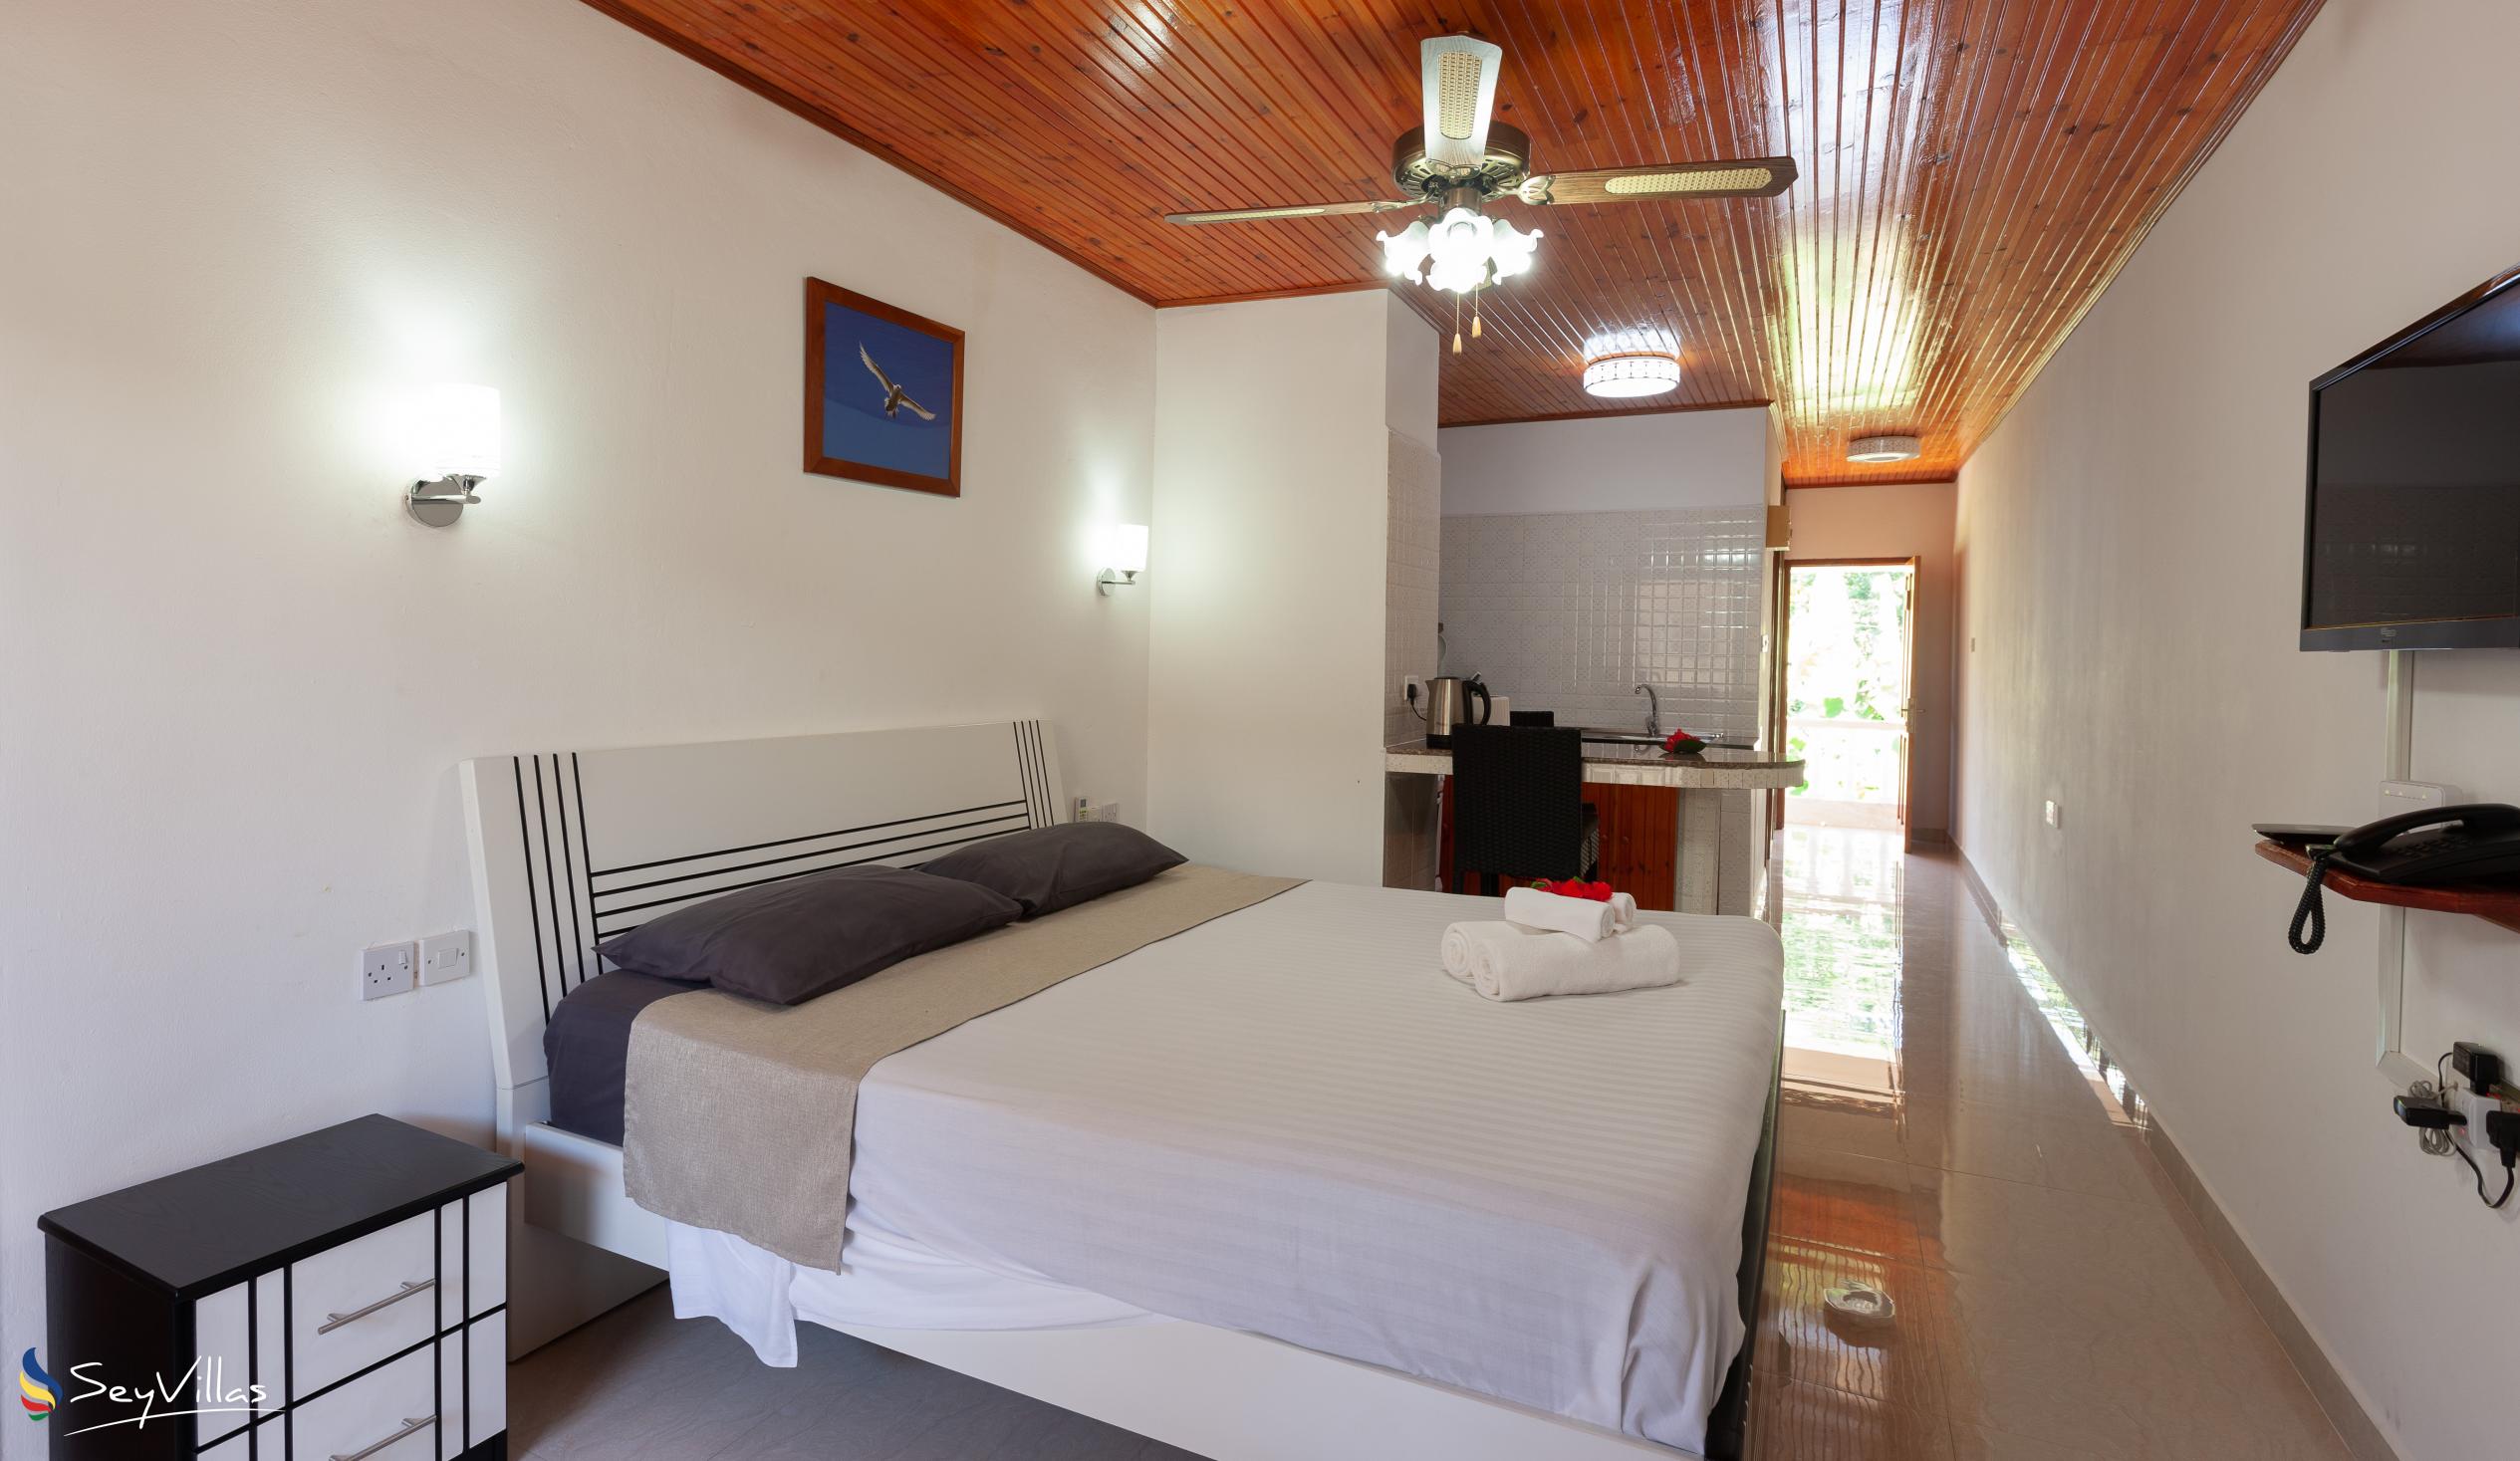 Photo 56: Tourterelle Holiday Home - Standard Studio - Praslin (Seychelles)